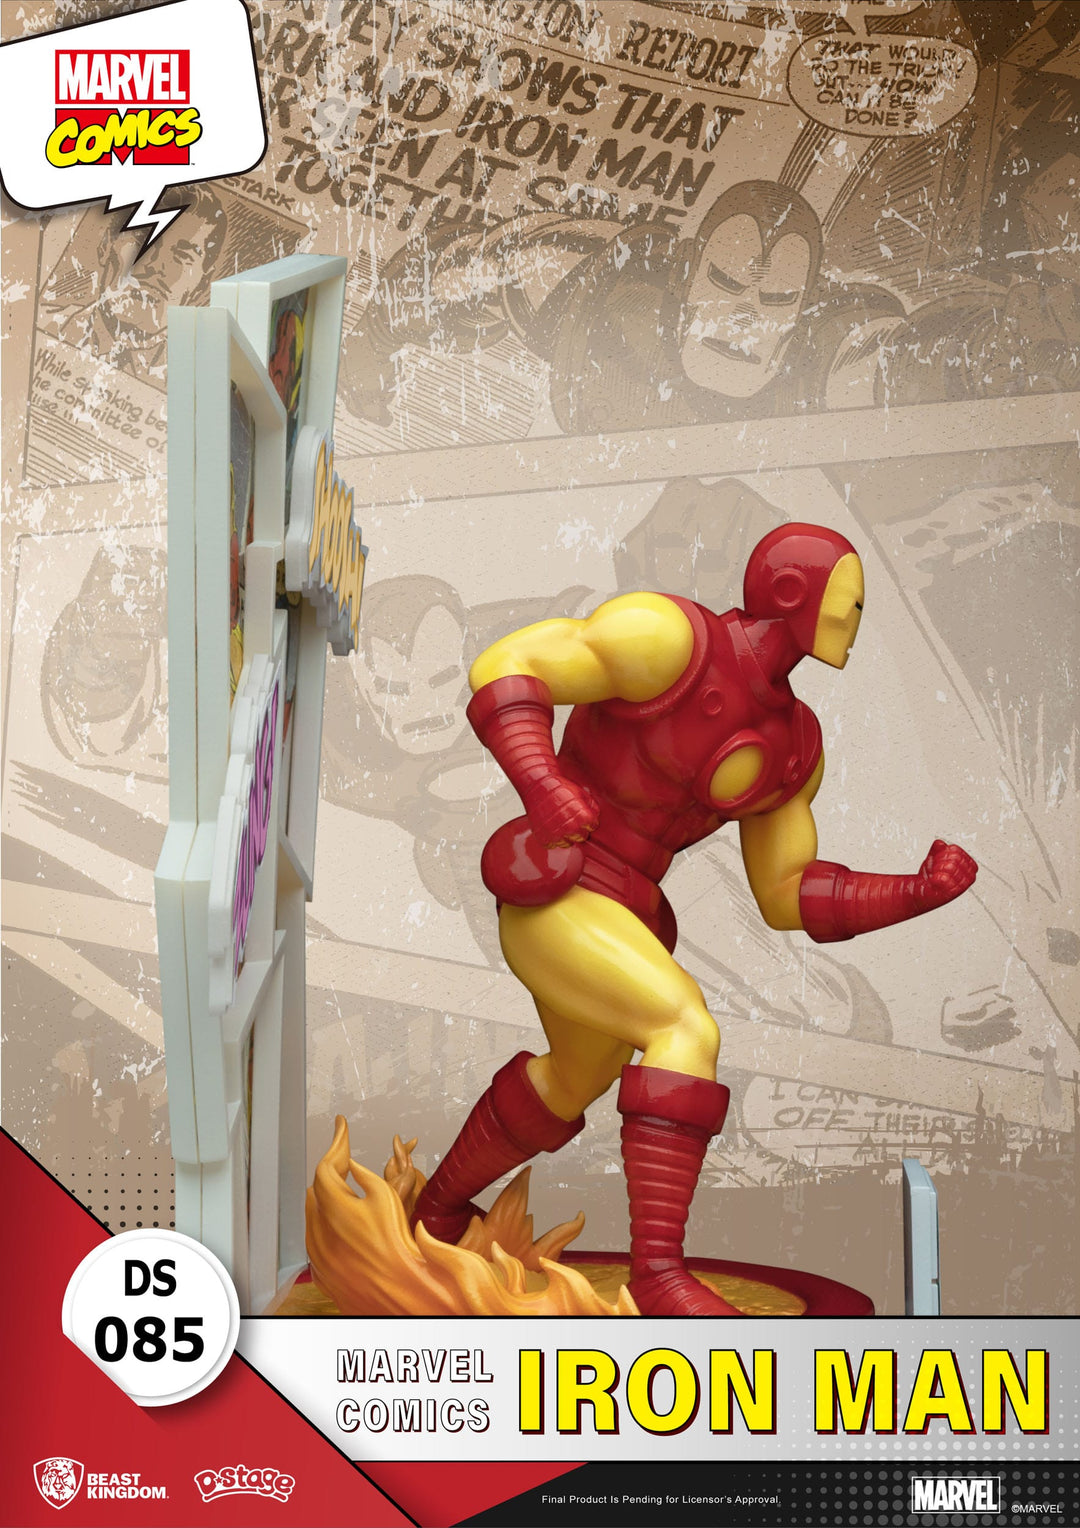 Marvel Comics Iron Man Diorama Figure